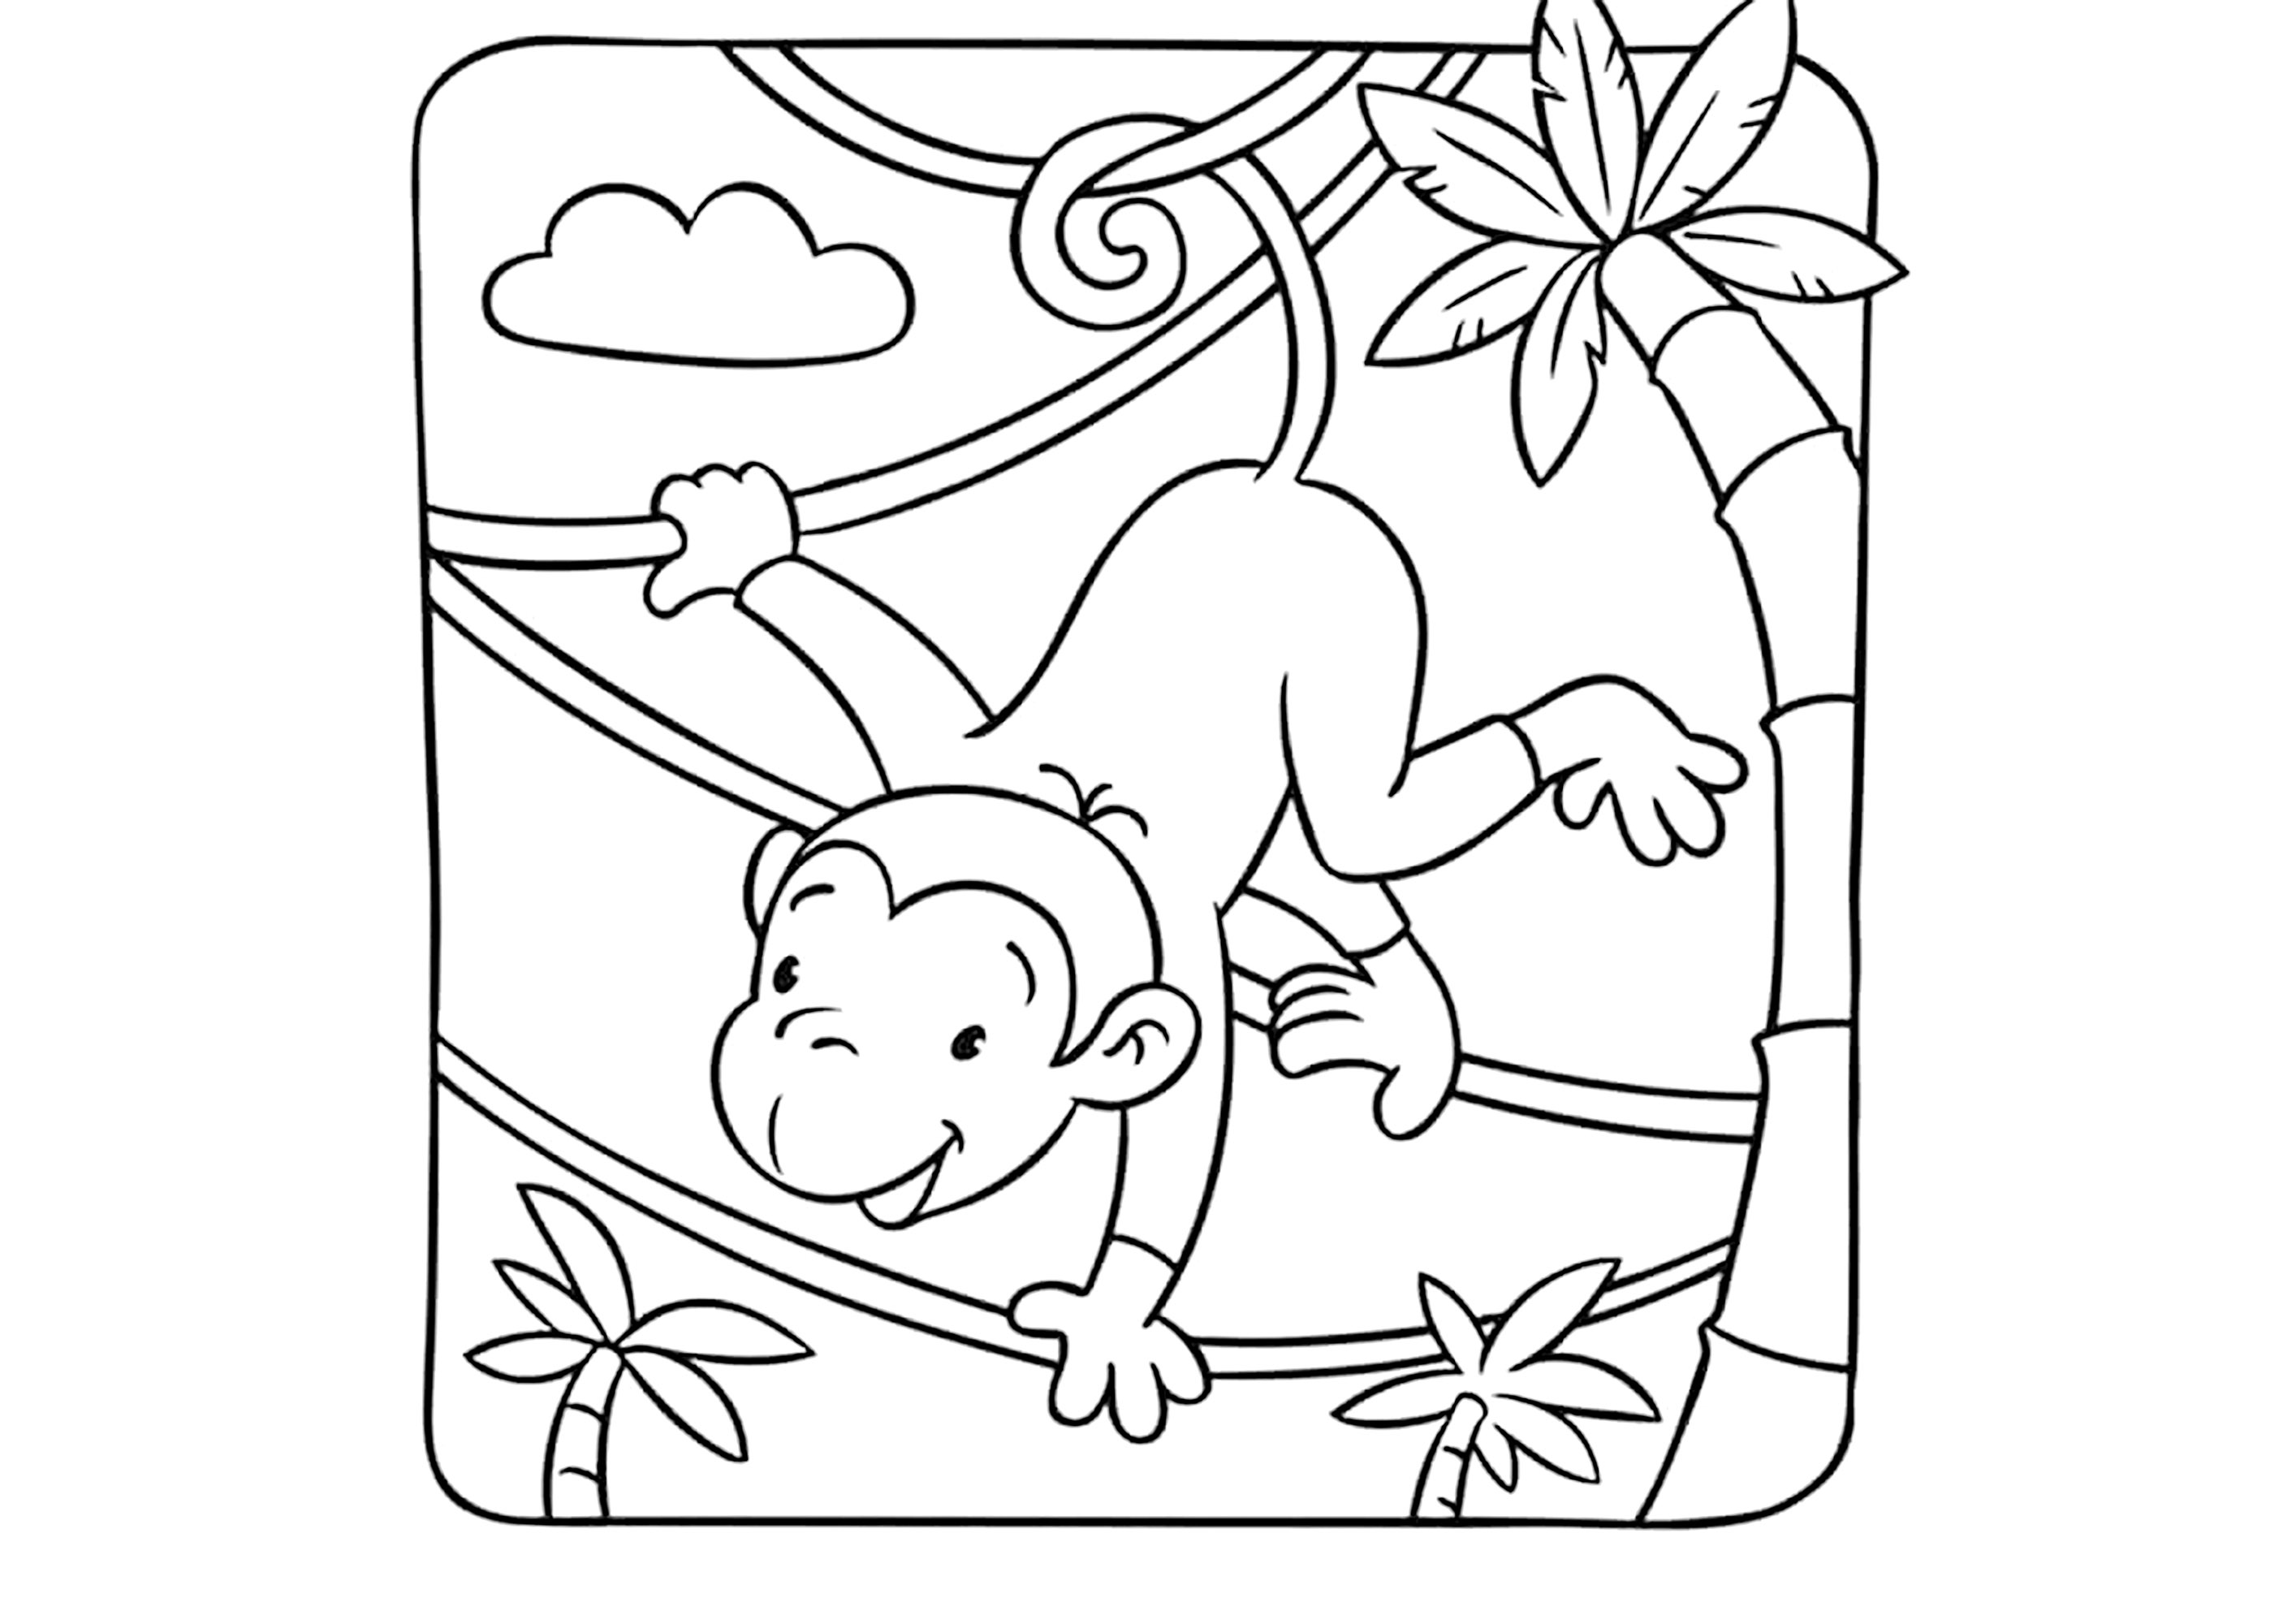 Monkey swinging from vine to vine